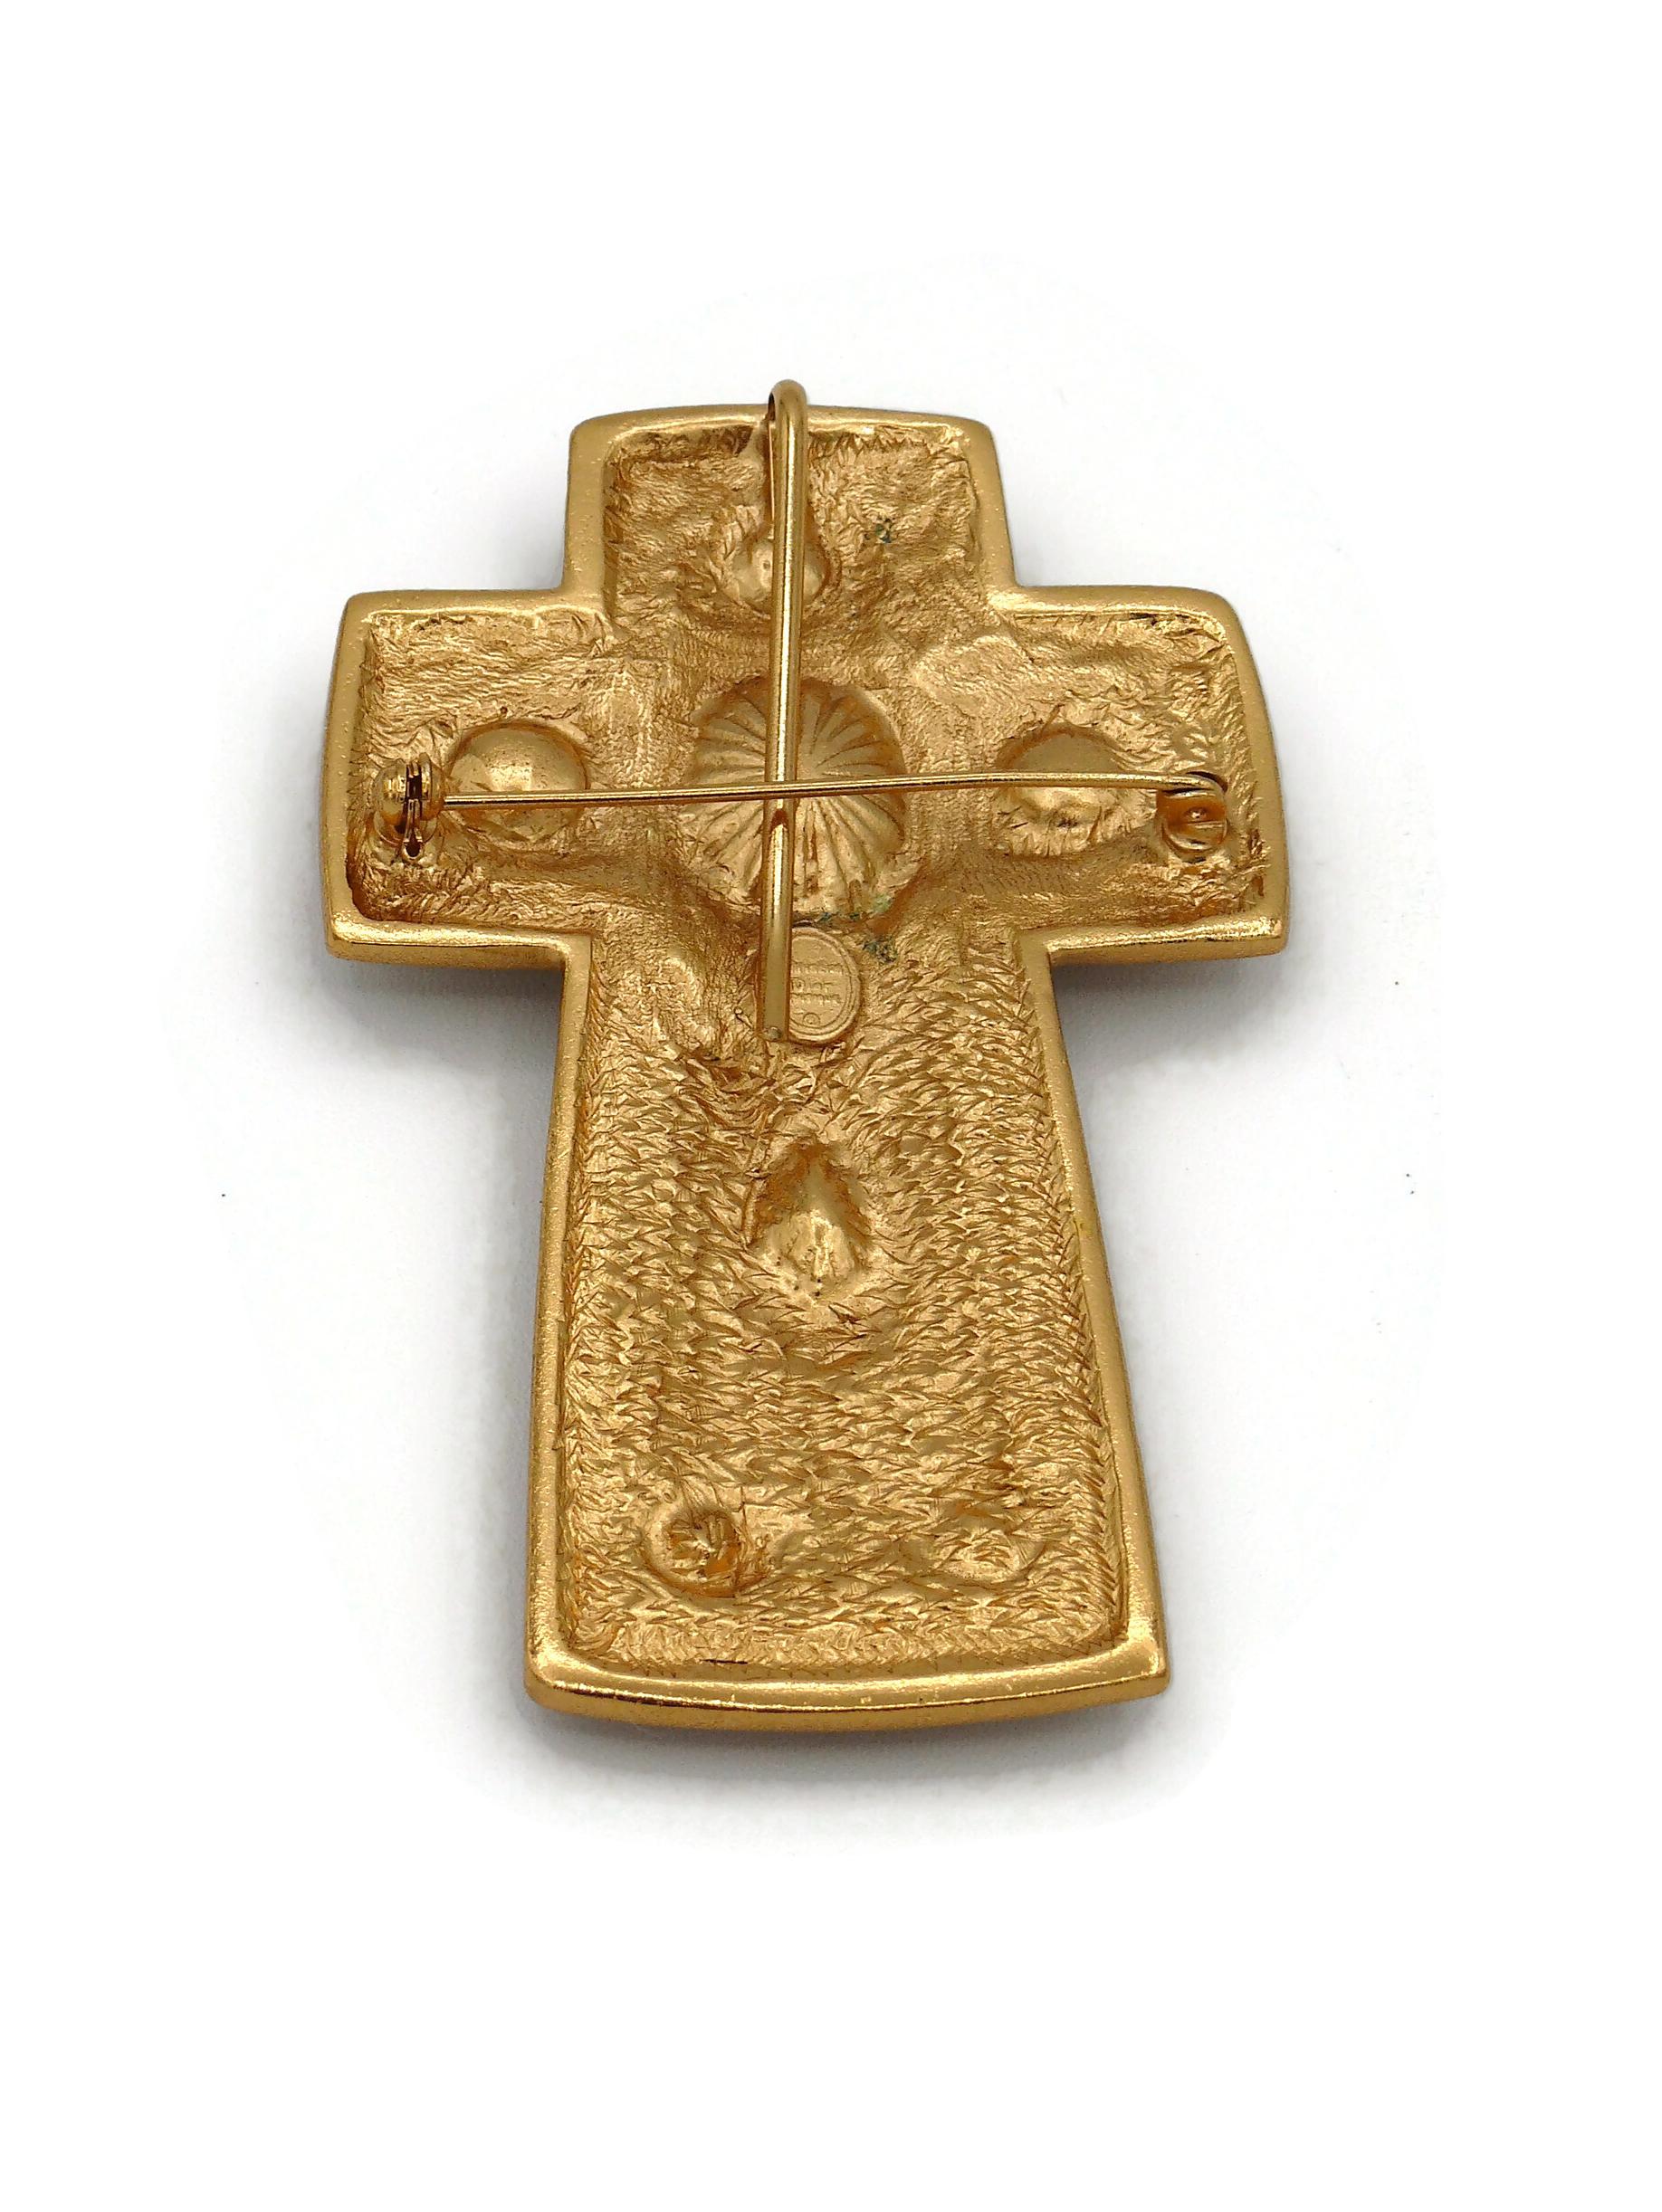 Christian Dior Boutique Vintage Massive Jewelled Cross Brooch Pendant For Sale 4